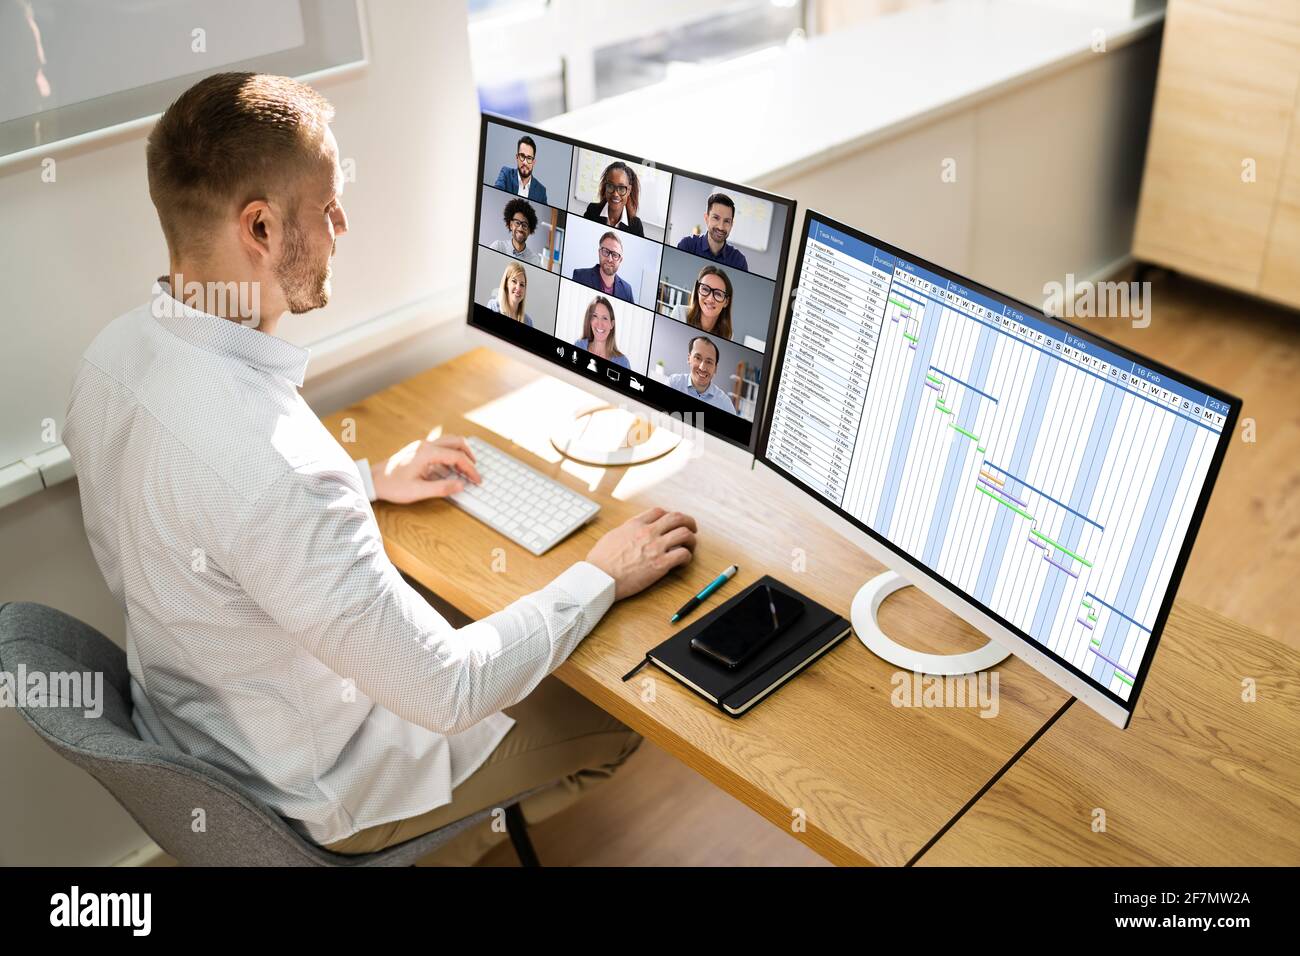 Virtual Office Conference Agenda On Multiple Desktop Screens Stock Photo